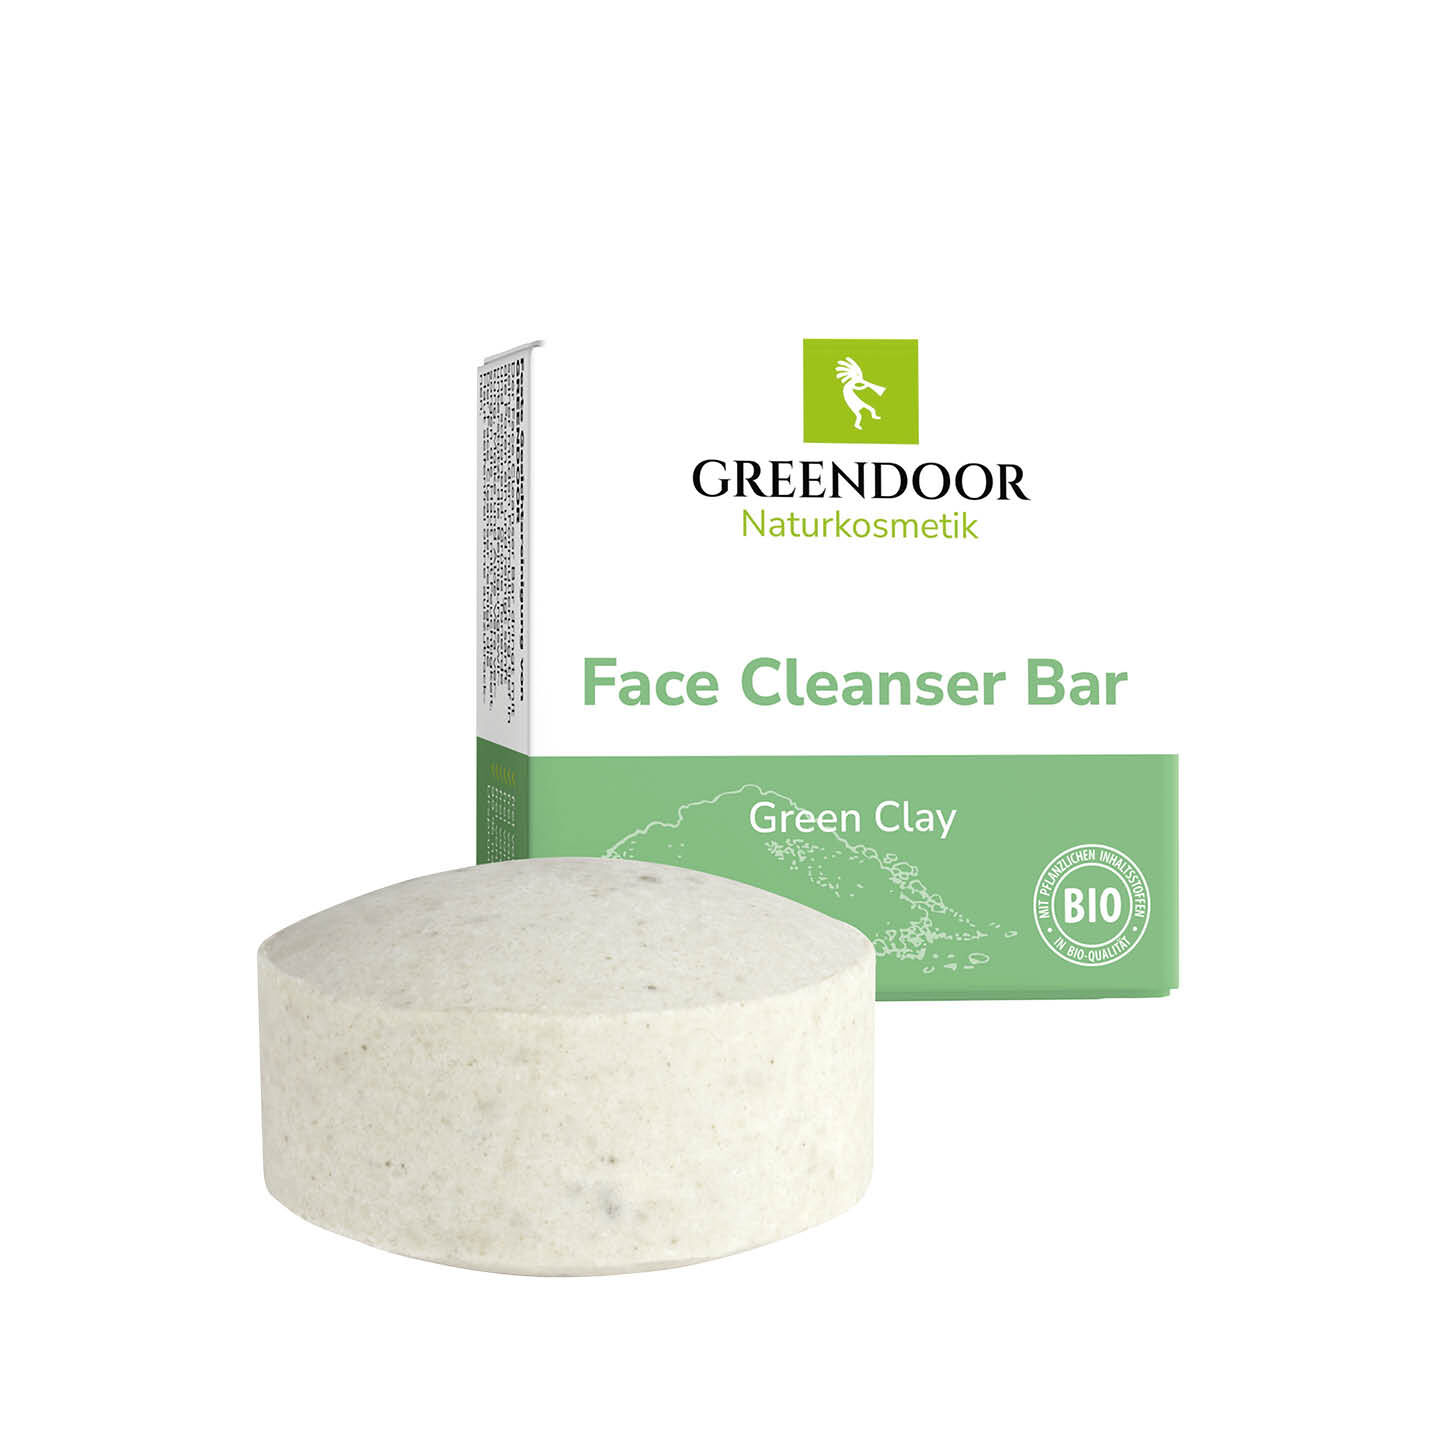 Face Cleanser Bar Green Clay